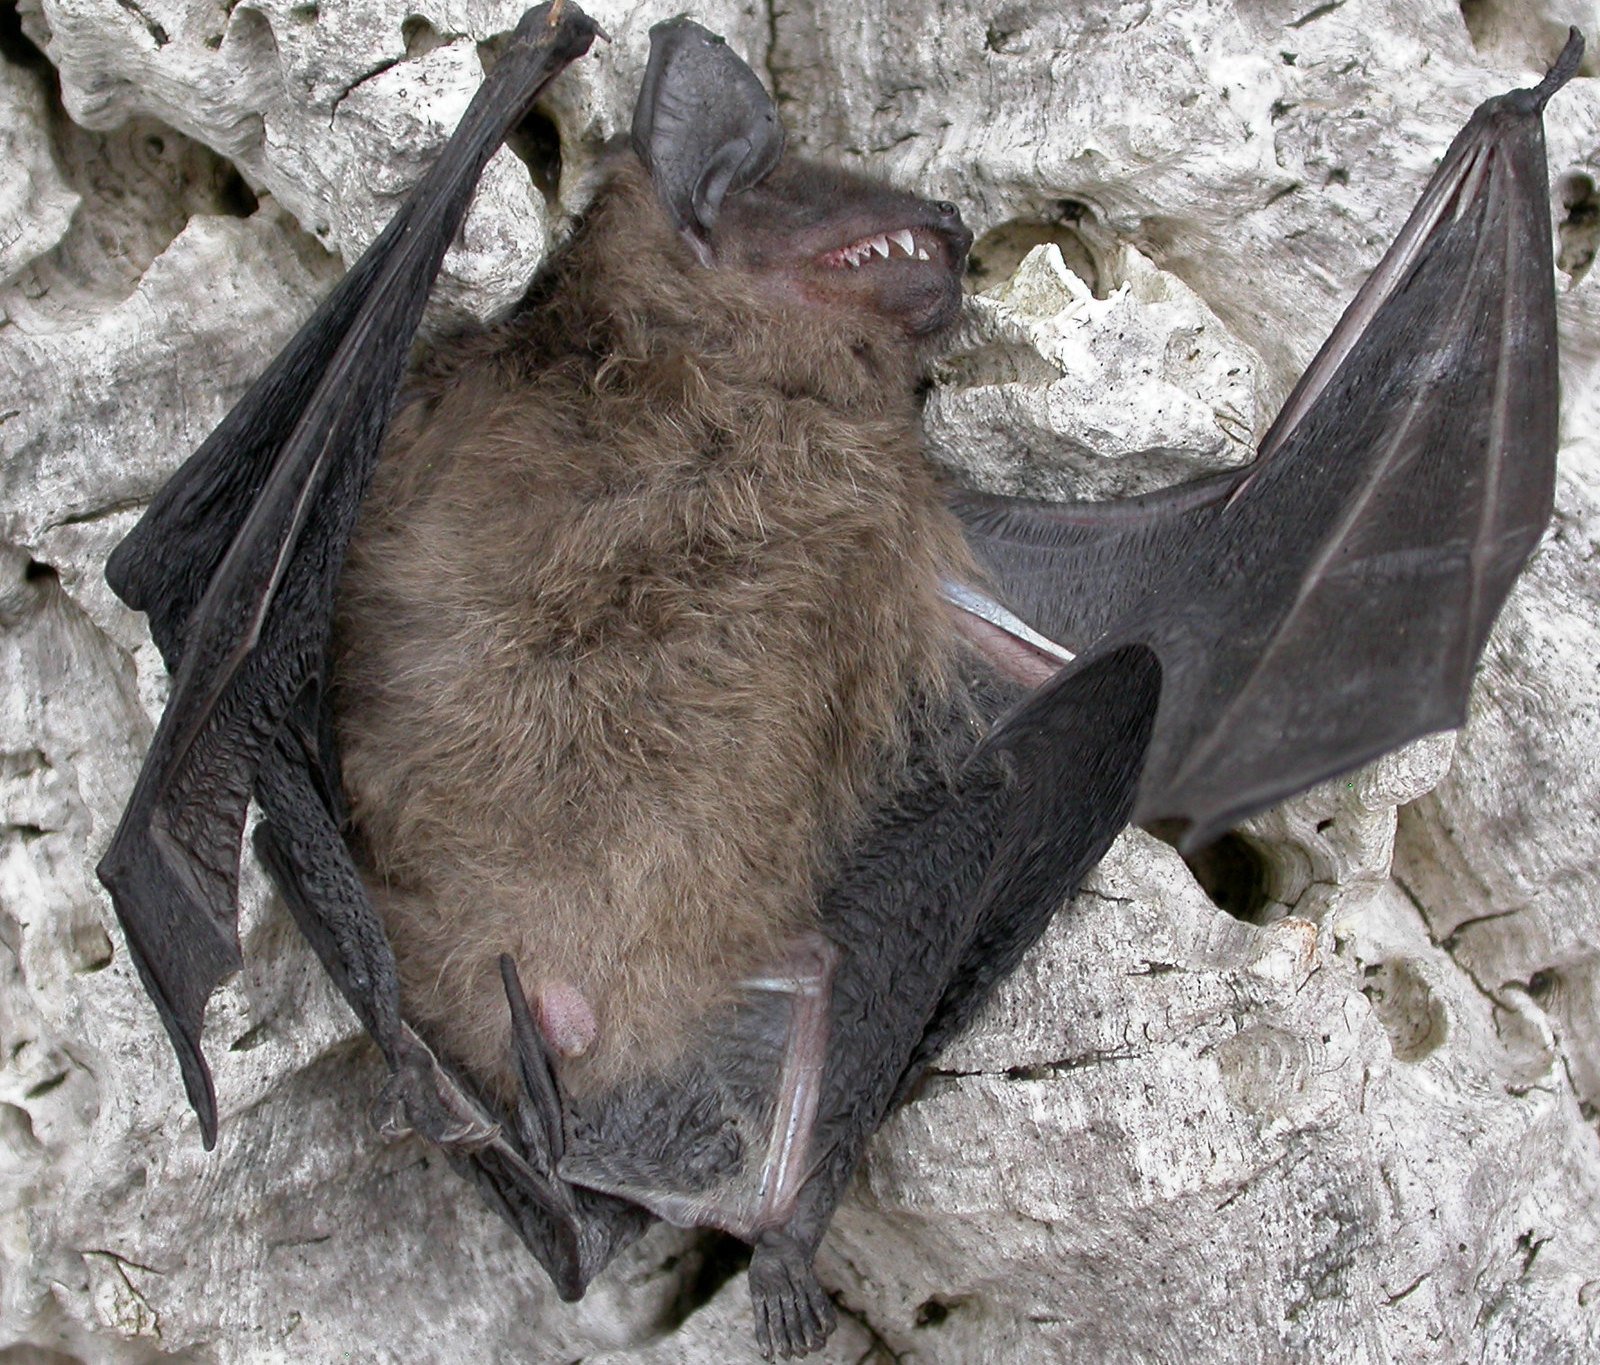 Bats with Giant Genitals